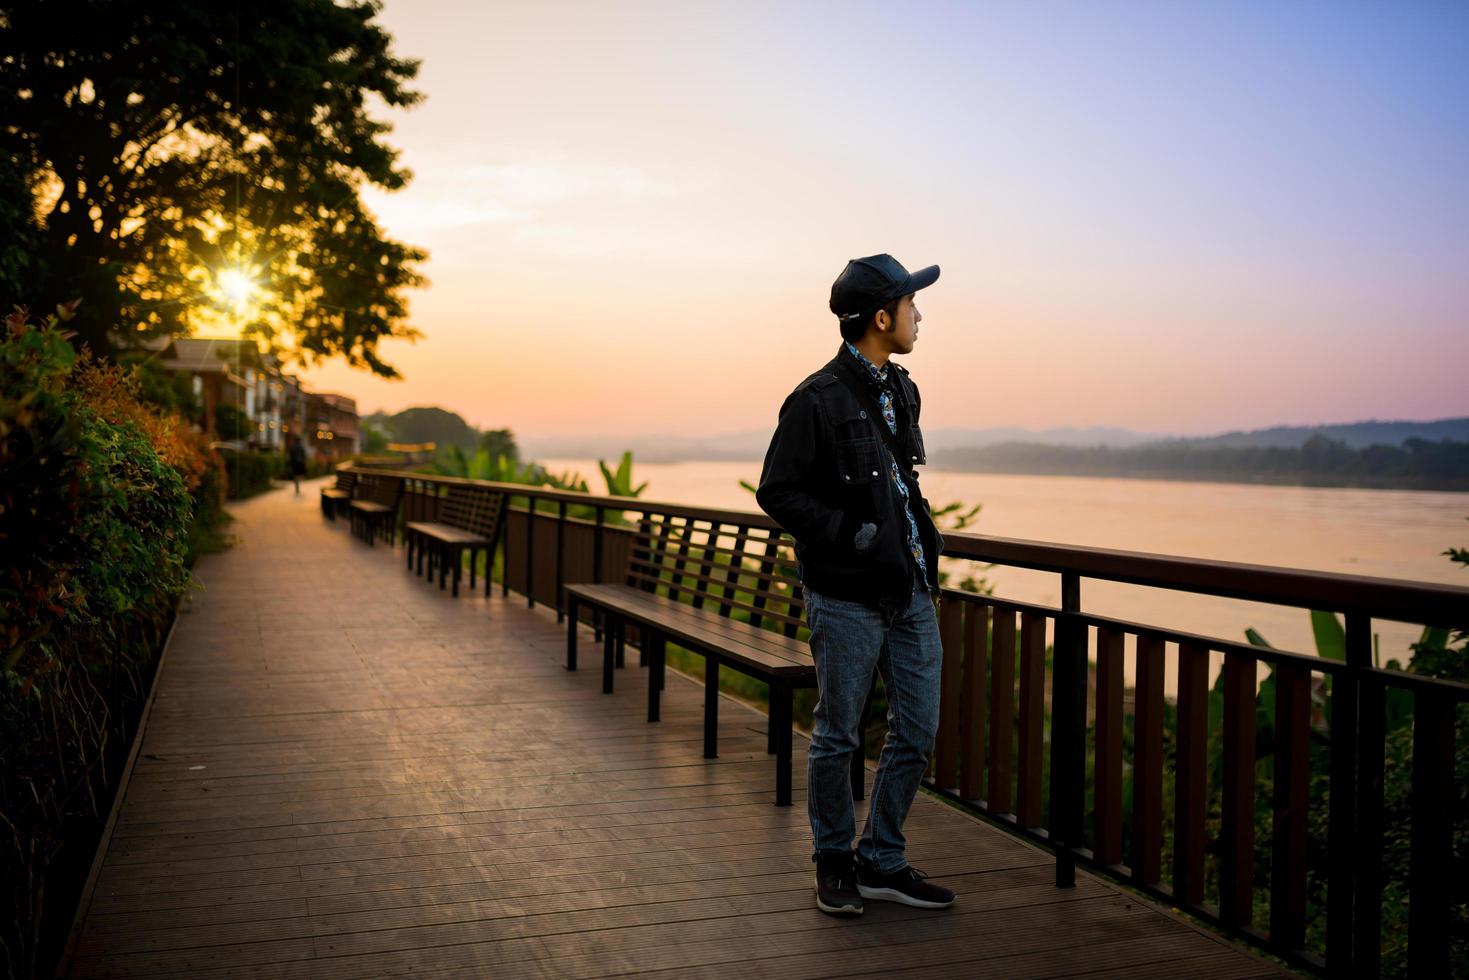 Traveler walking over a wooden bridge near the river in sunset photo